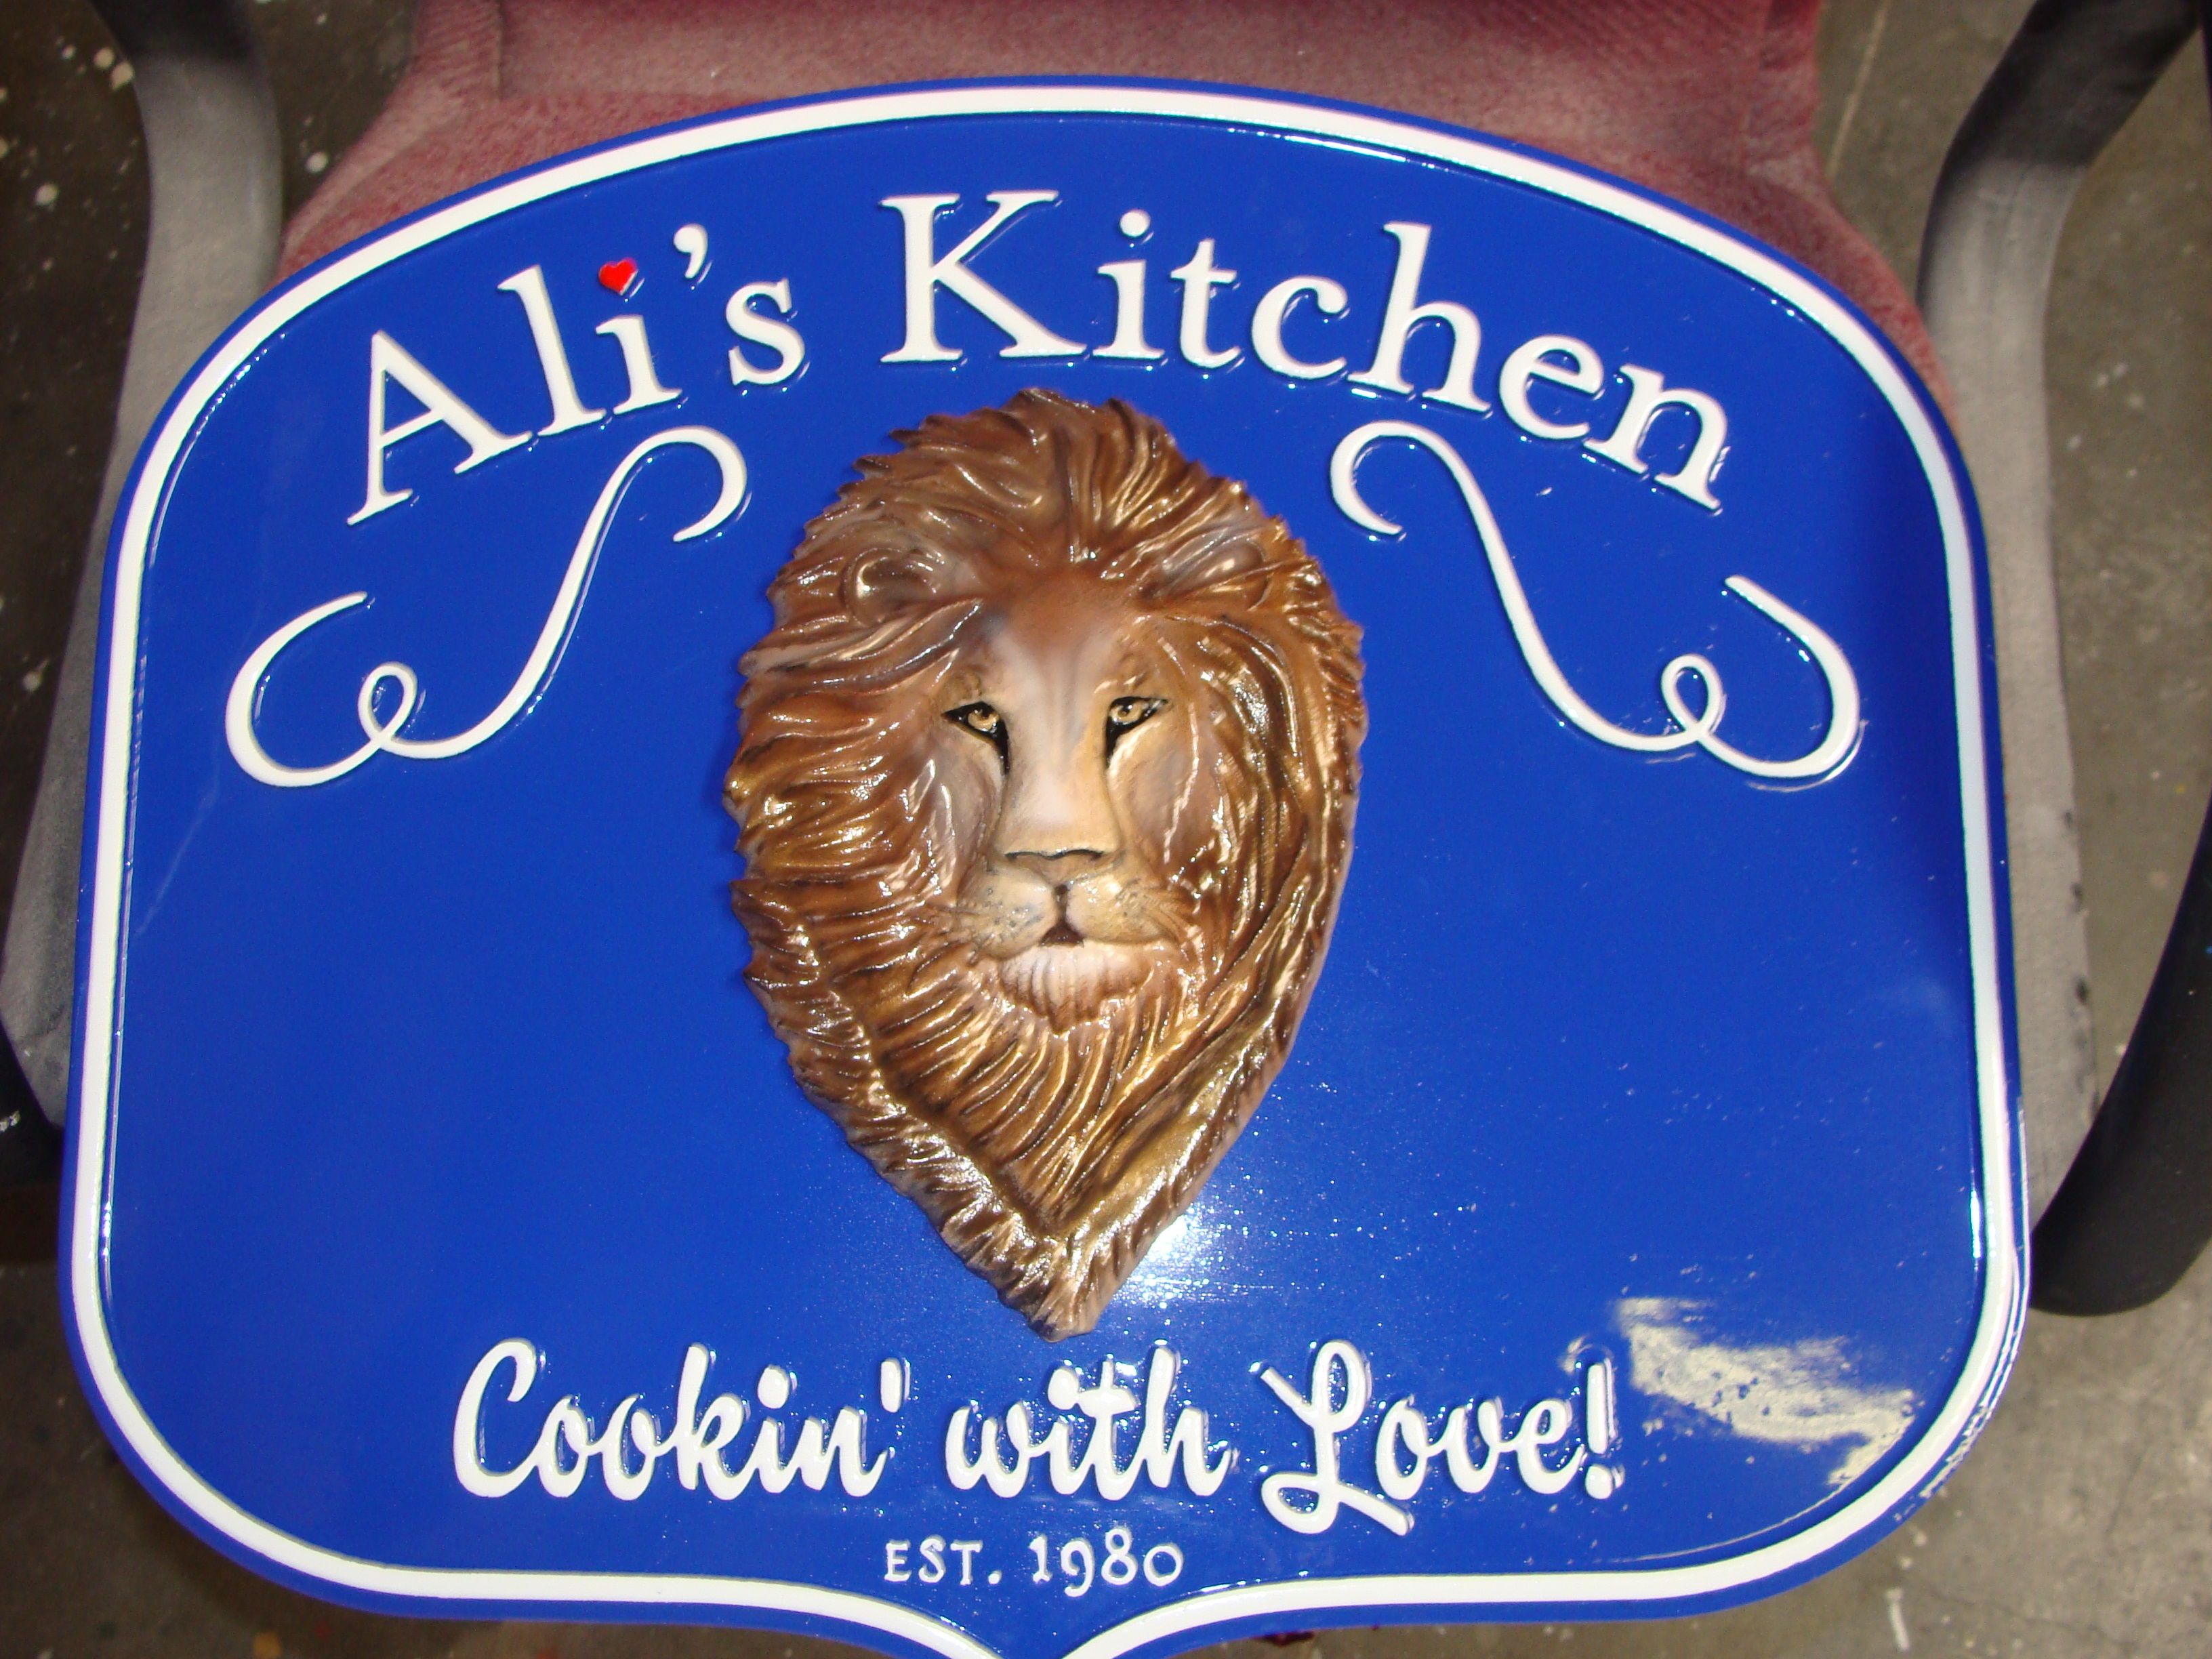 Q25045 - 3D Carved HDU Cafe Sign, with Lion Head, "Ali's Kitchen"